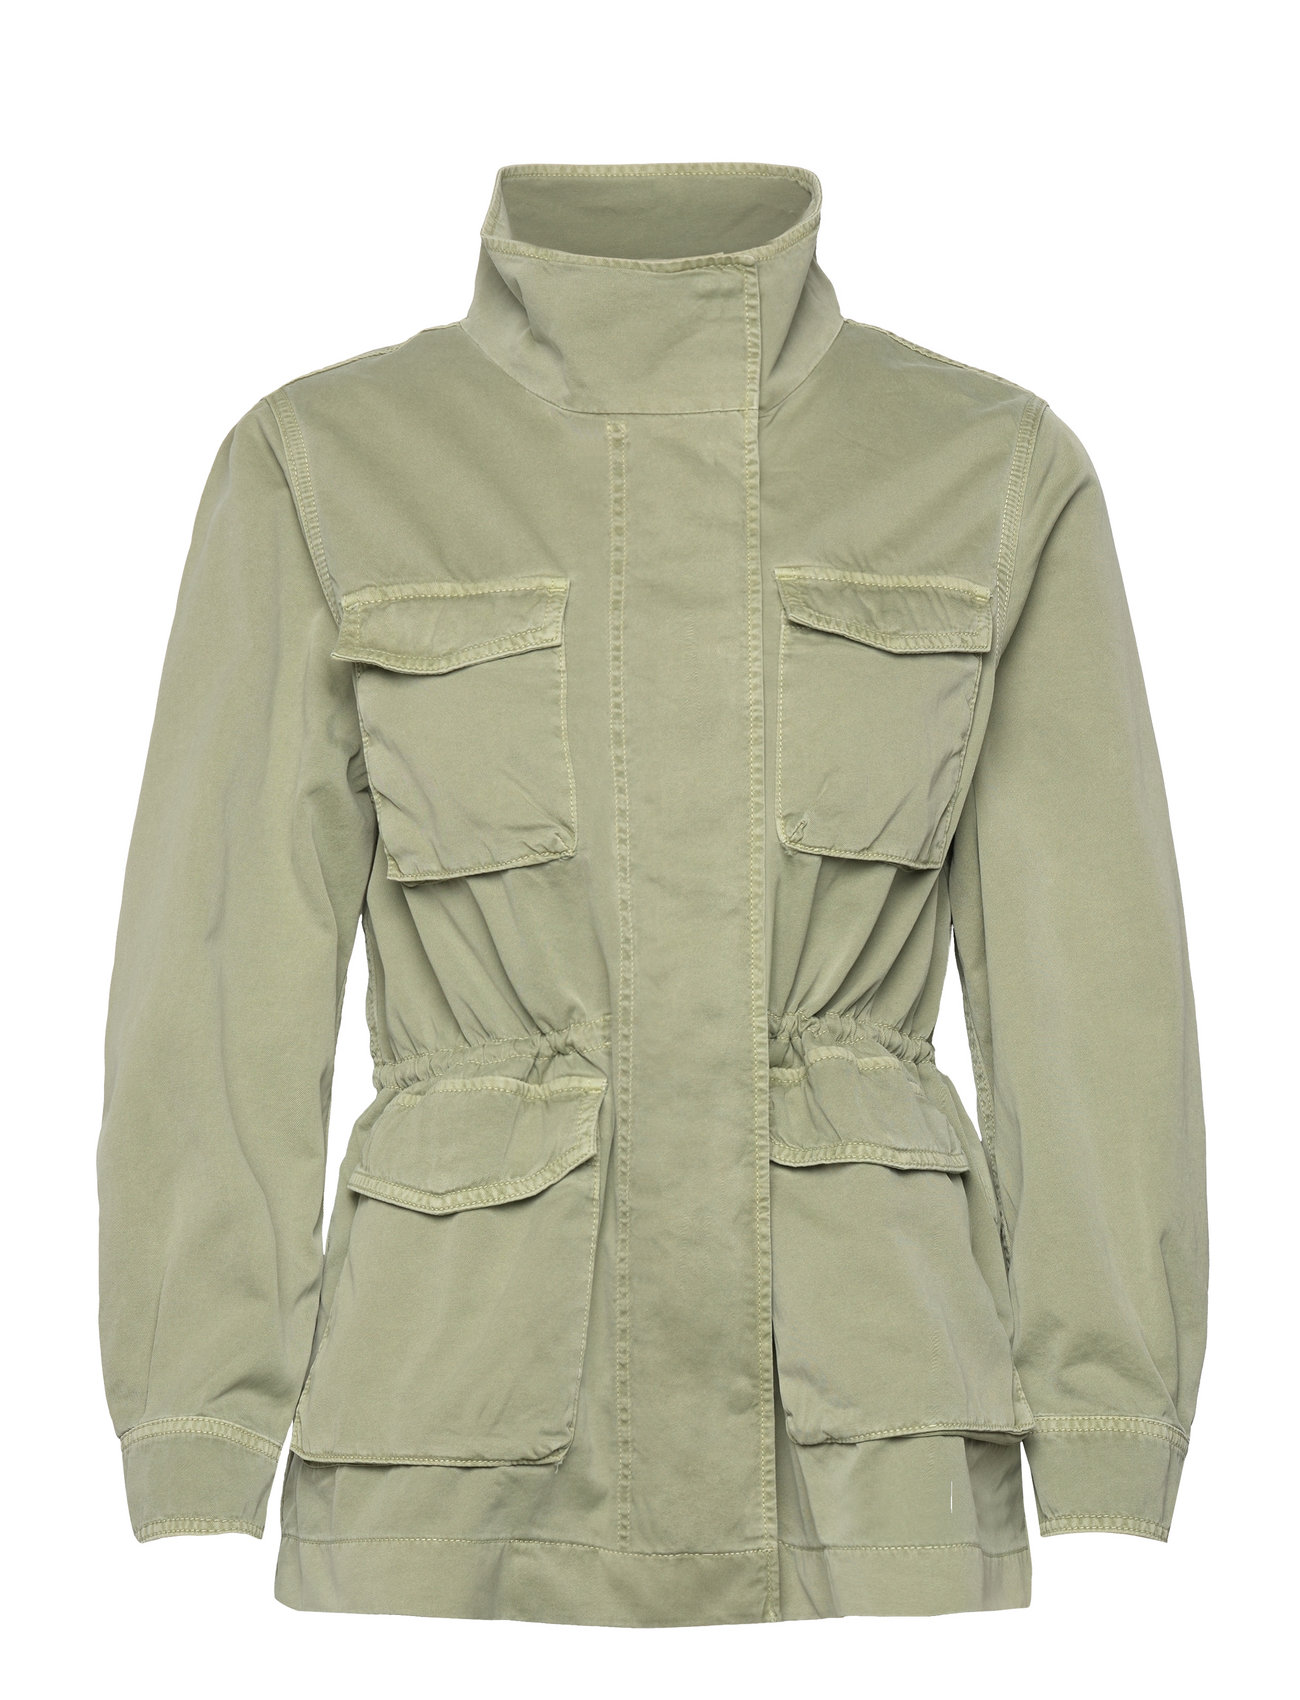 GANT Garment Dye Field Jacket - 182 €. Buy Utility jackets from GANT ...